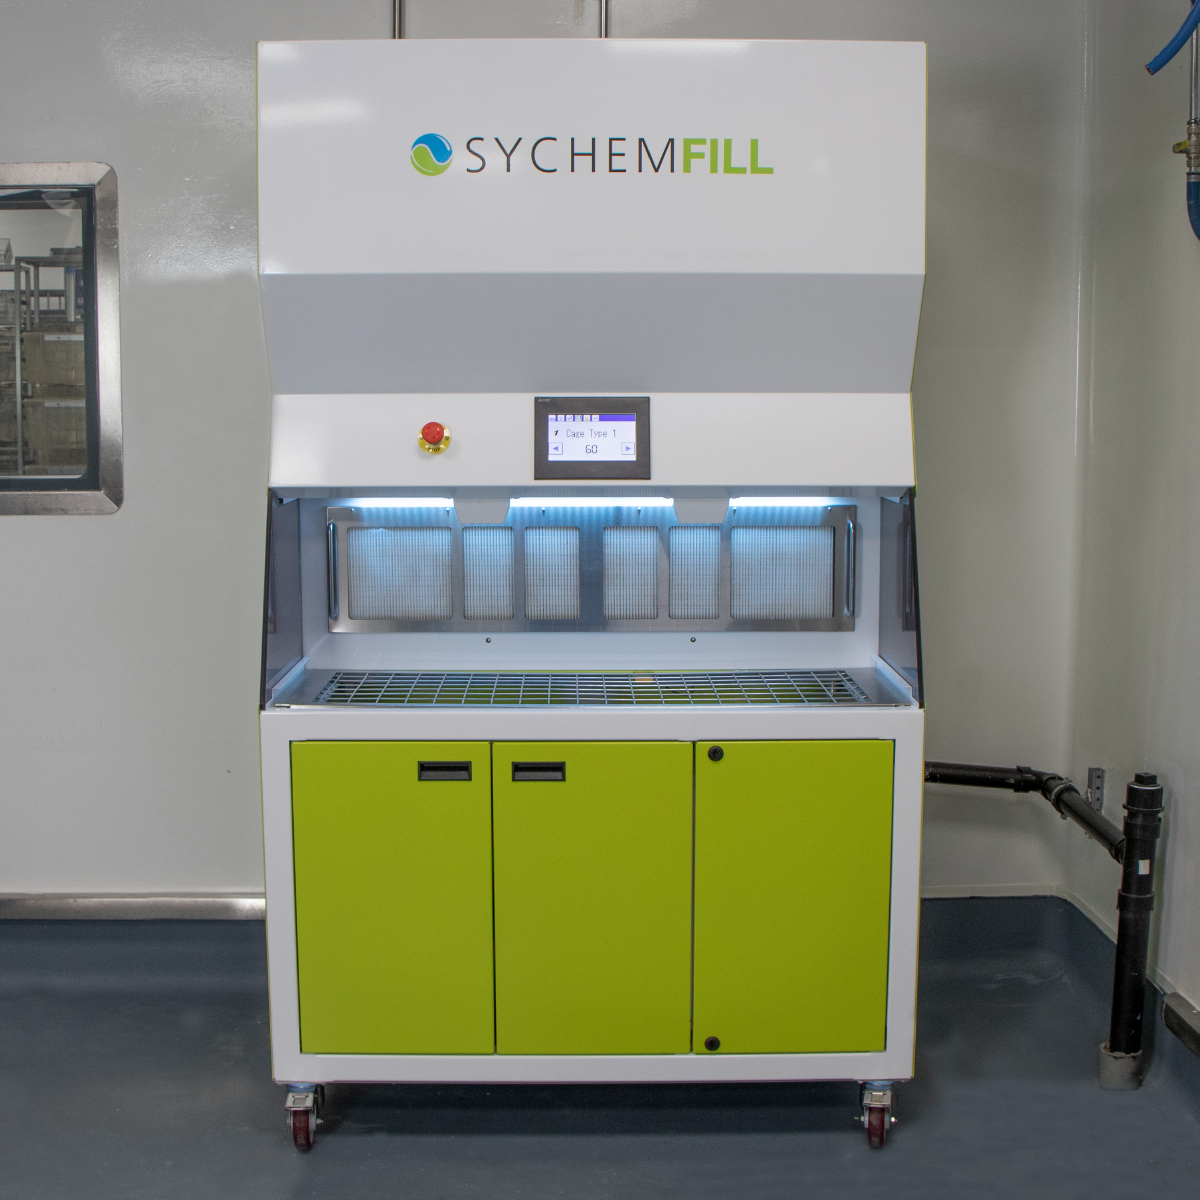 SychemFILL clean bedding dispenser